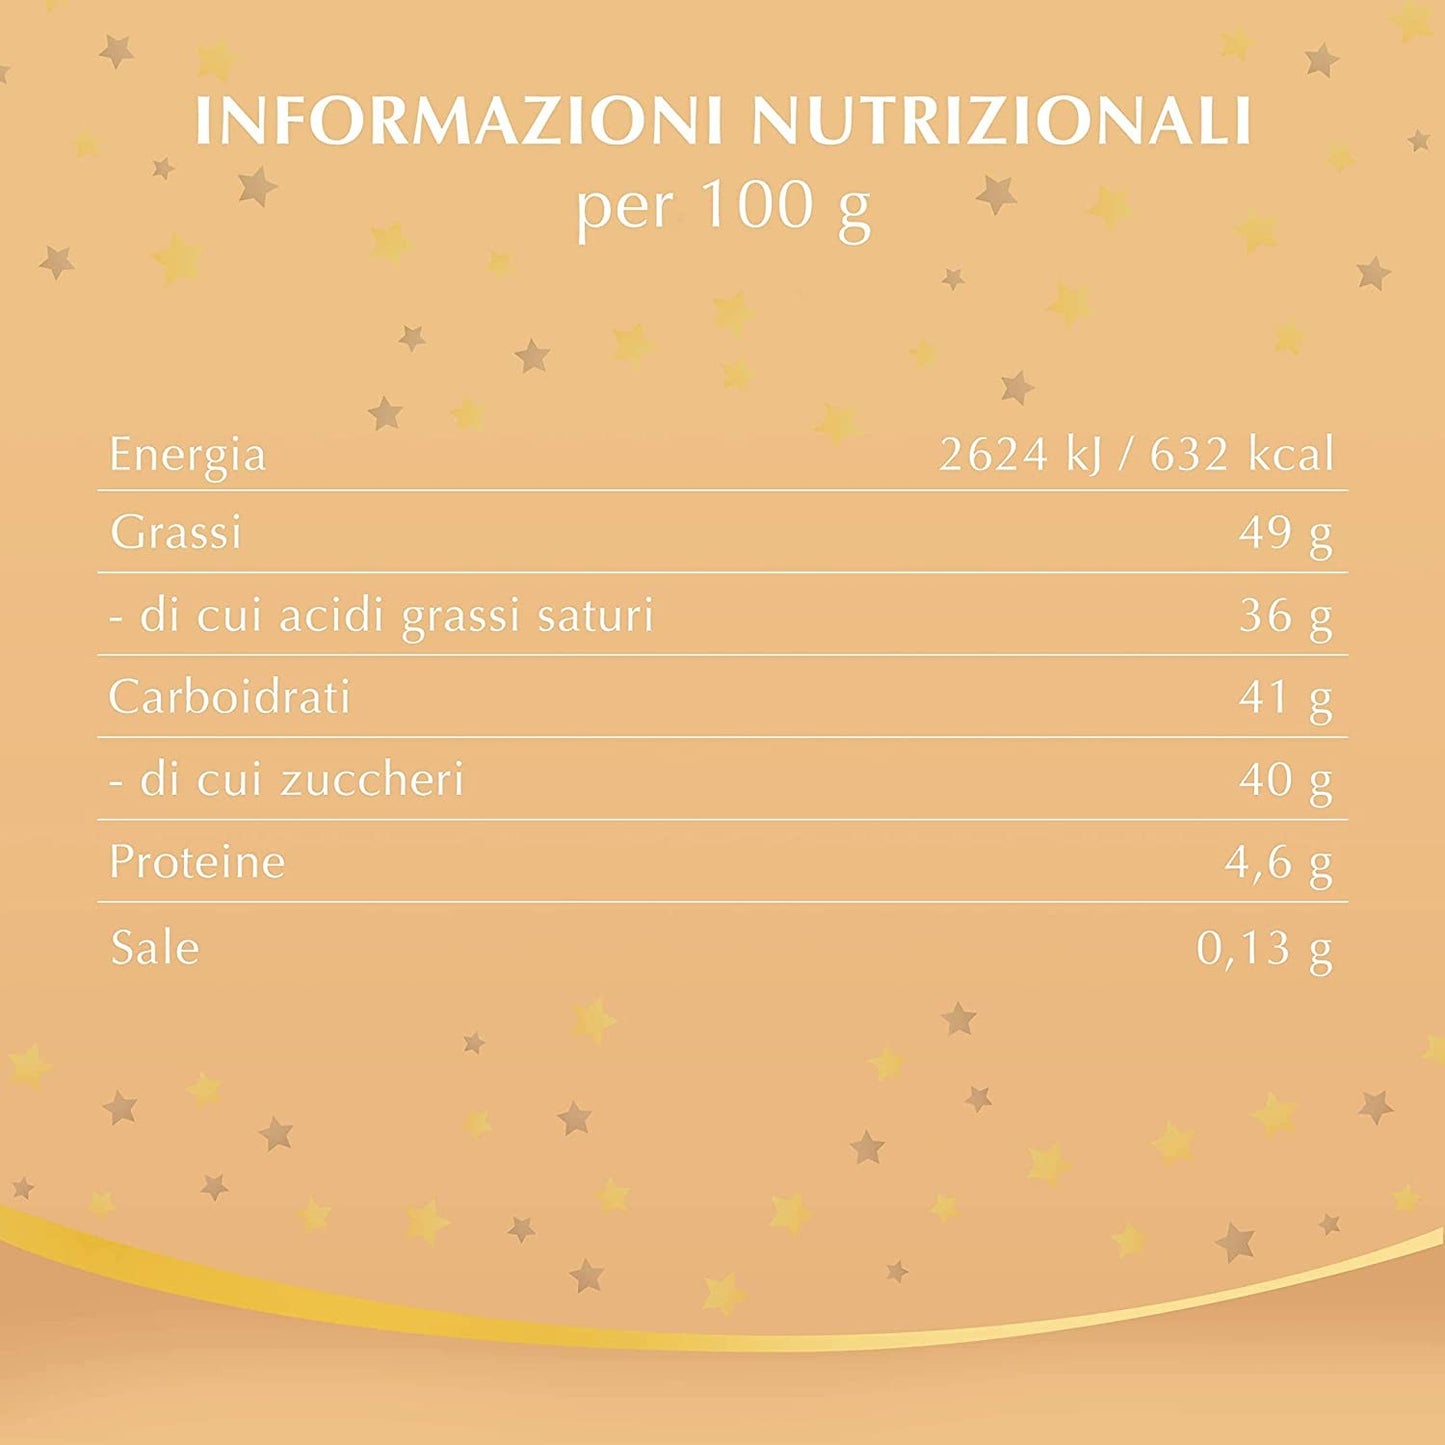 Caramelle Golia - Gusto Frutta C - 20 Astucci